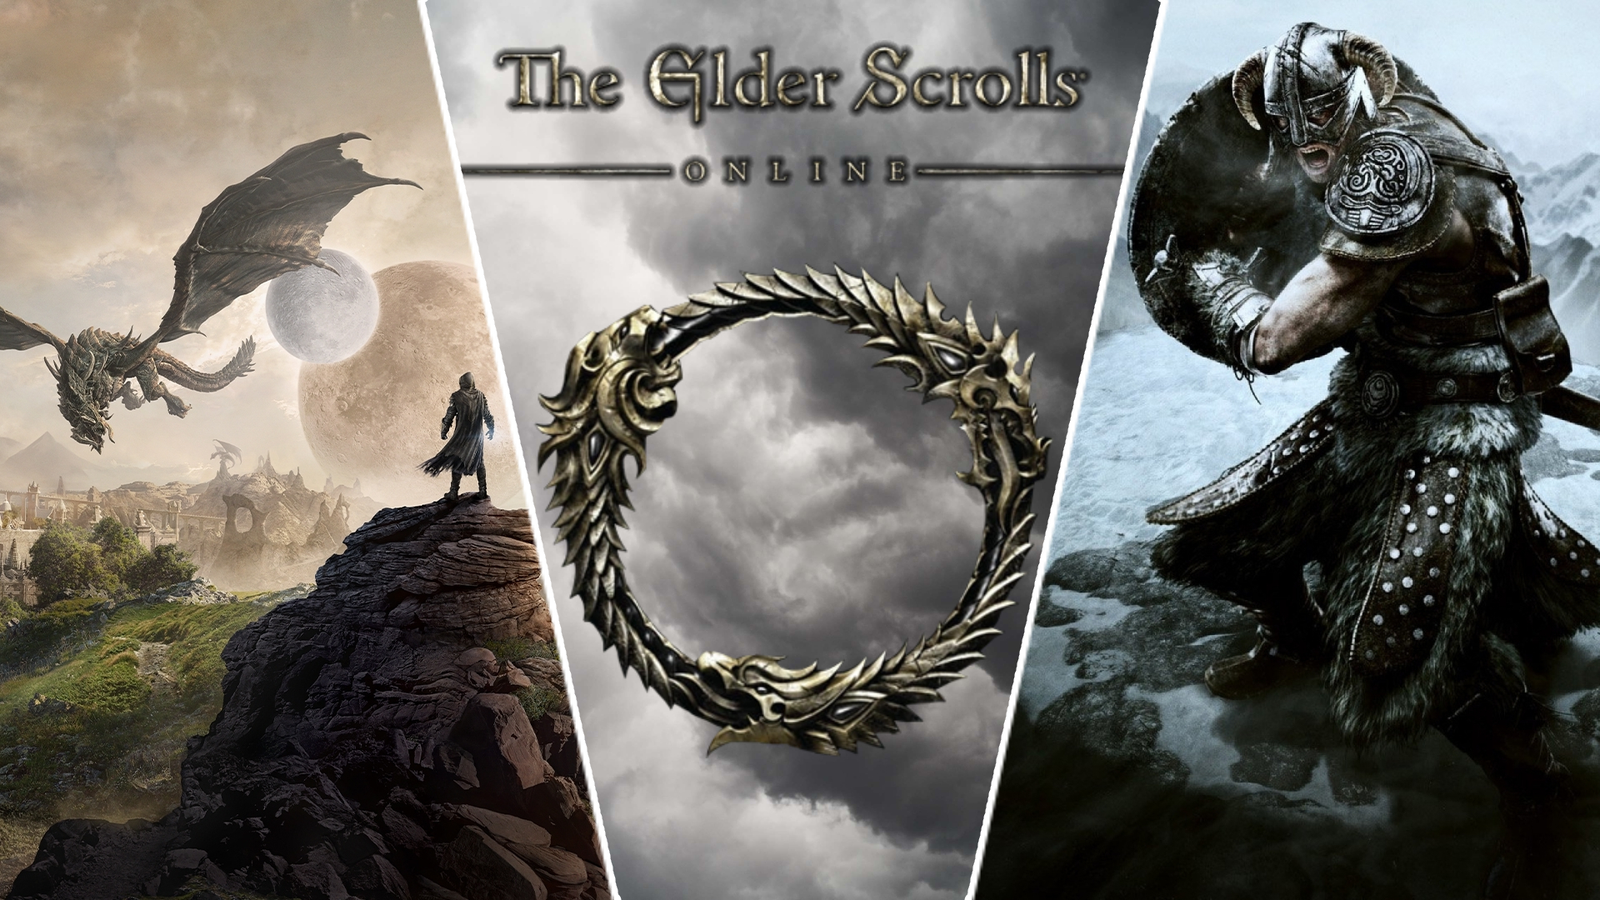 Elder Scrolls Online Live Player Count and Statistics